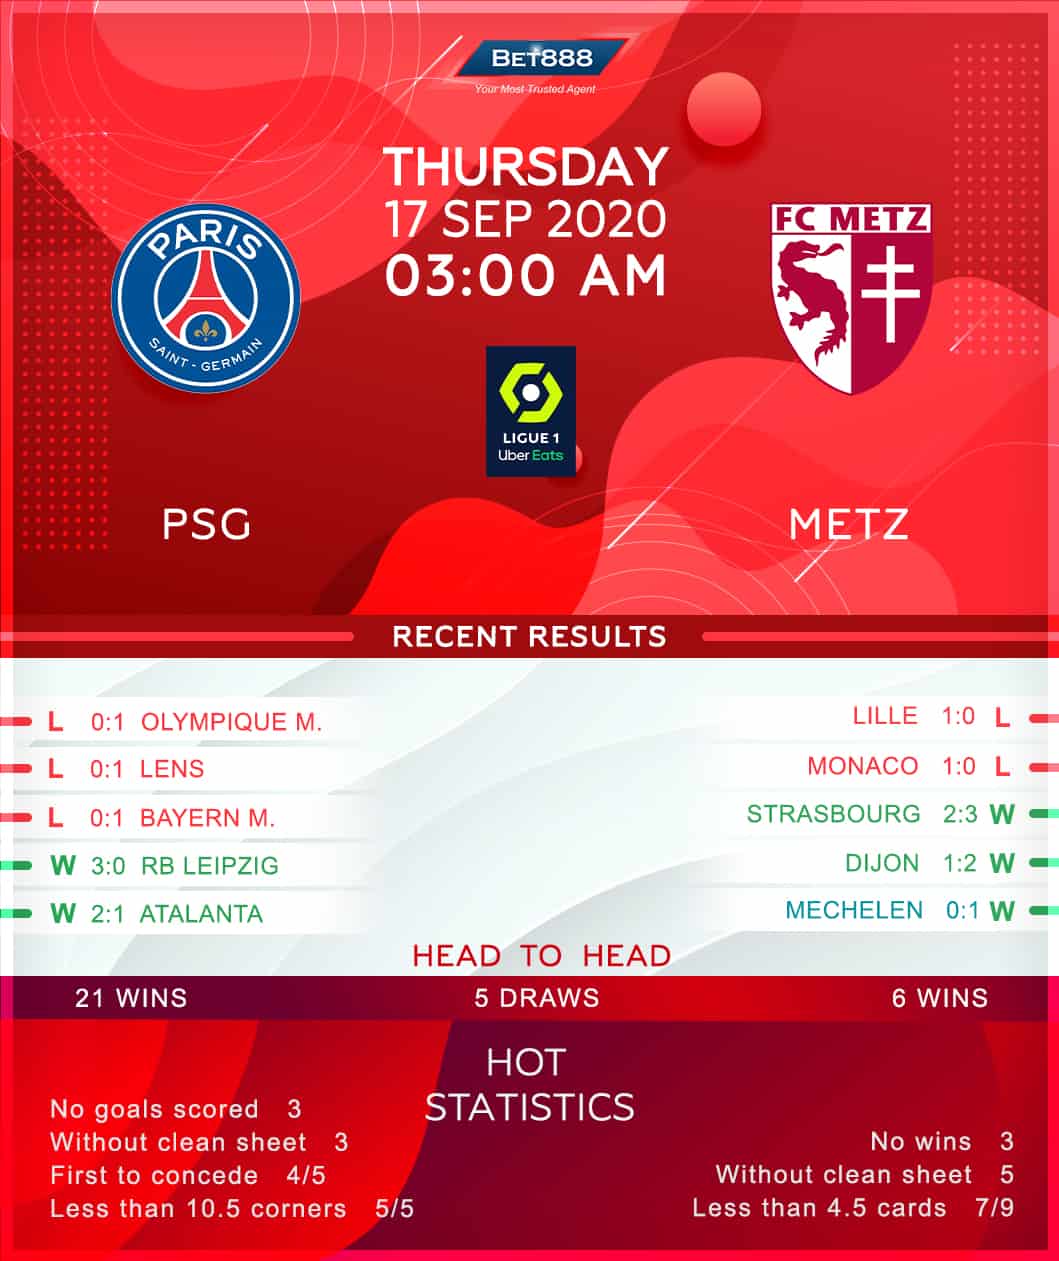 PSG vs Metz 17/09/20